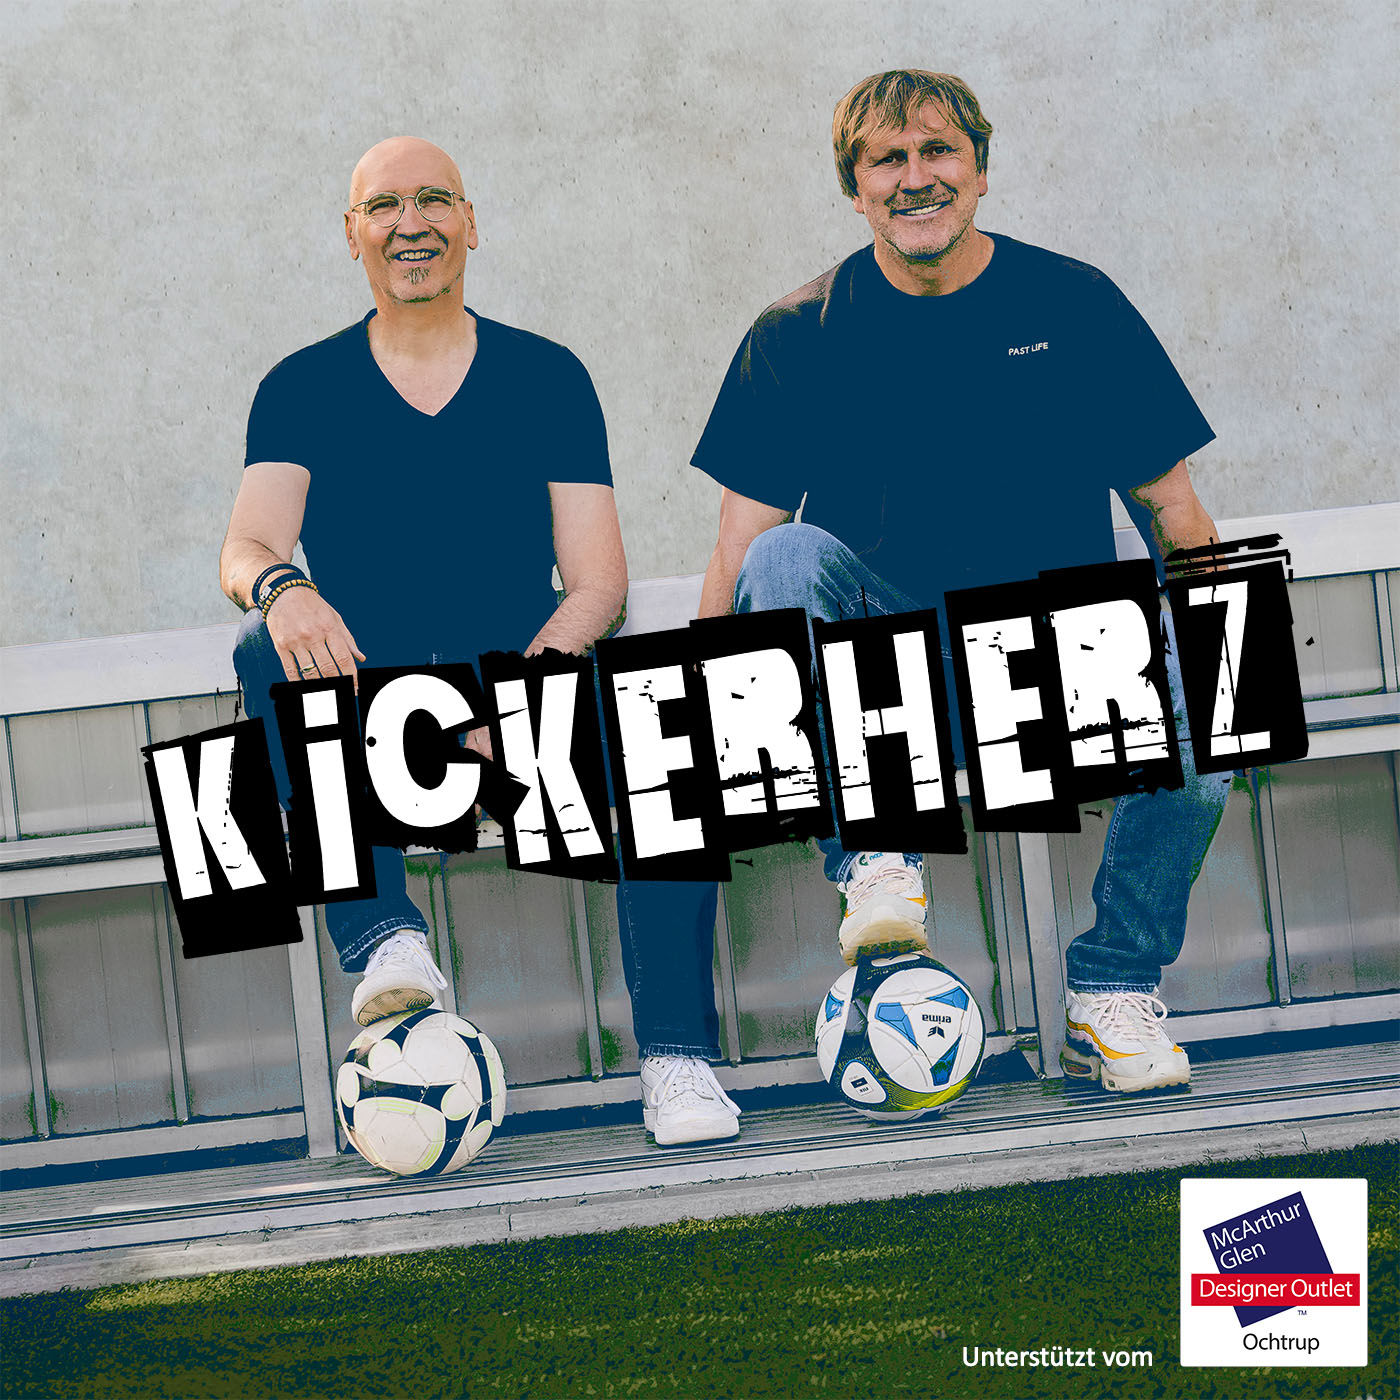 Kickerherz